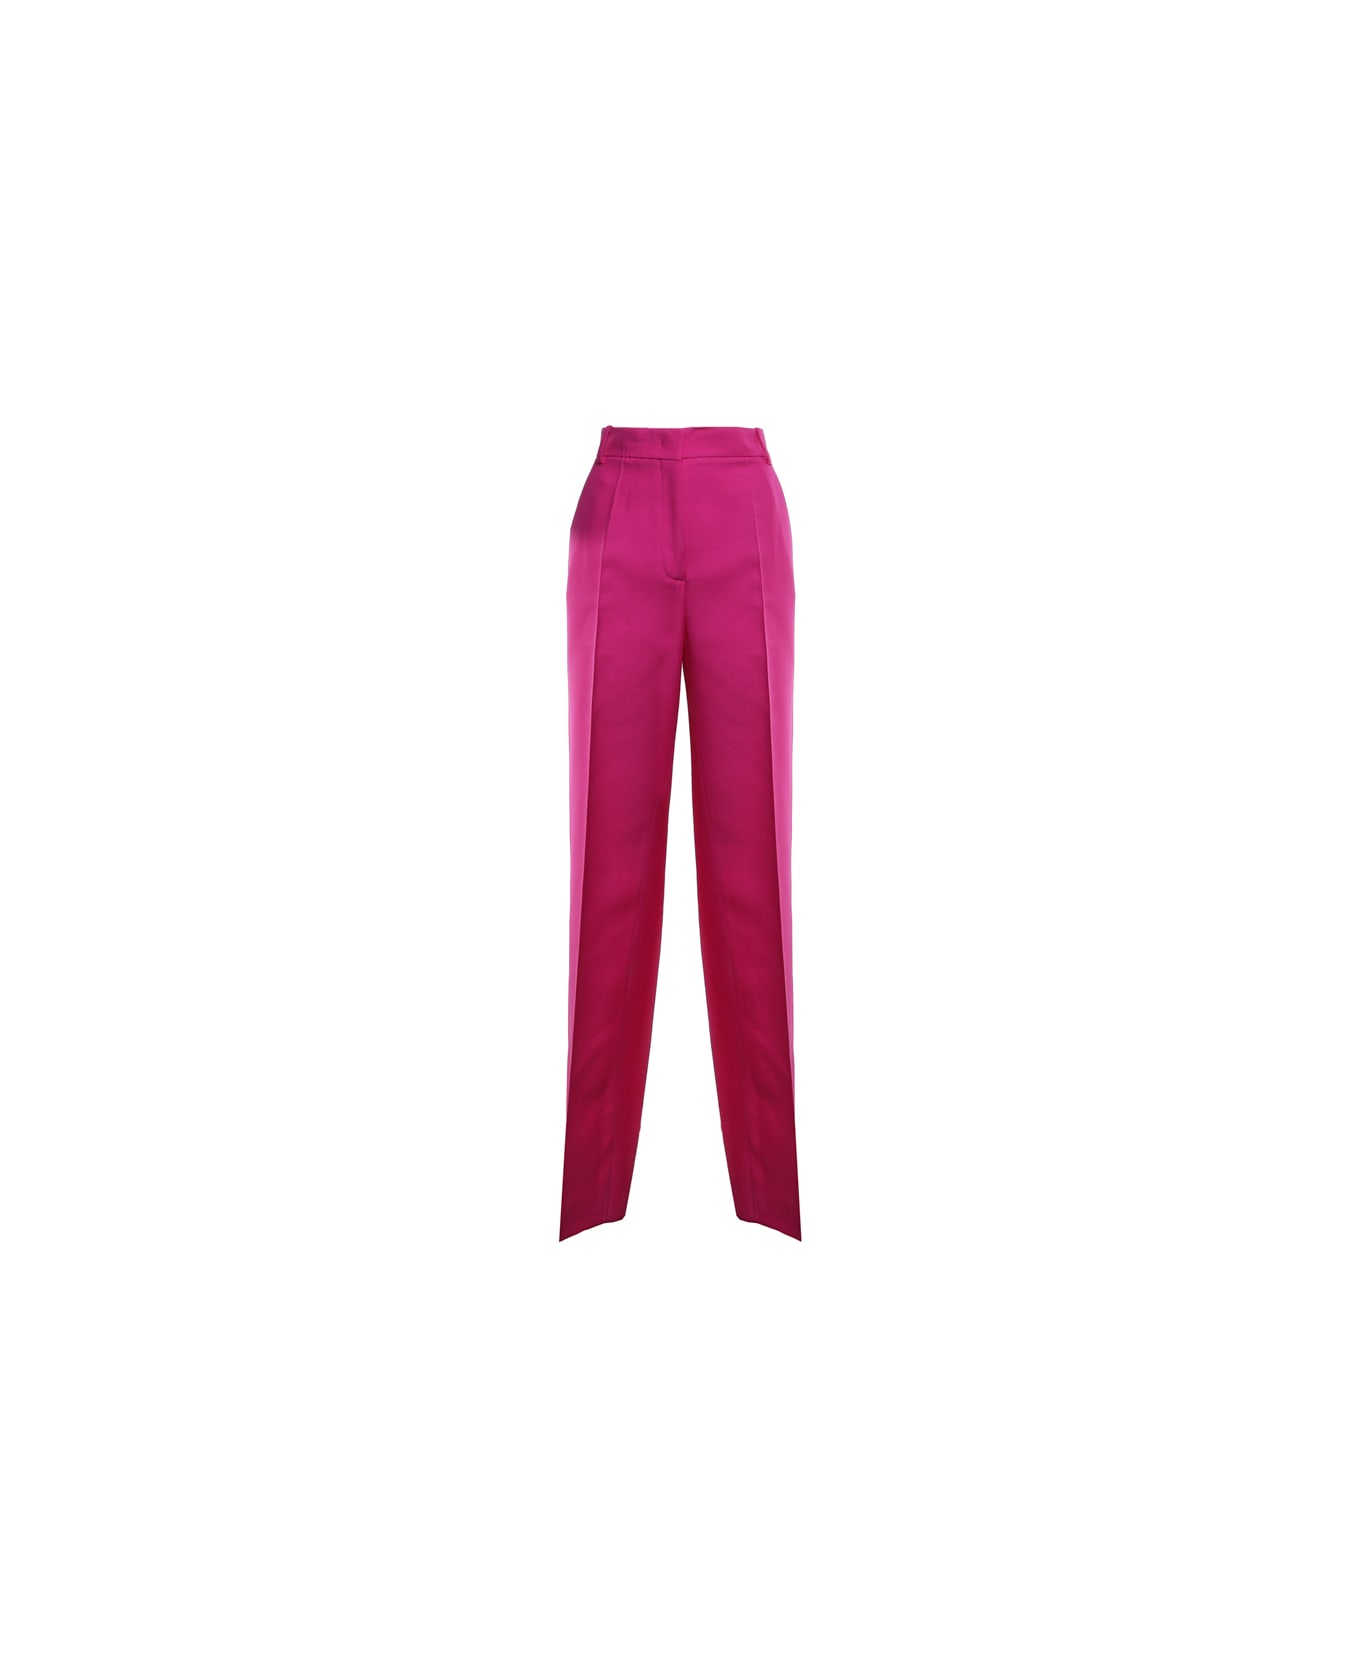 Valentino Garavani Pp Pink Trousers - Pp pink